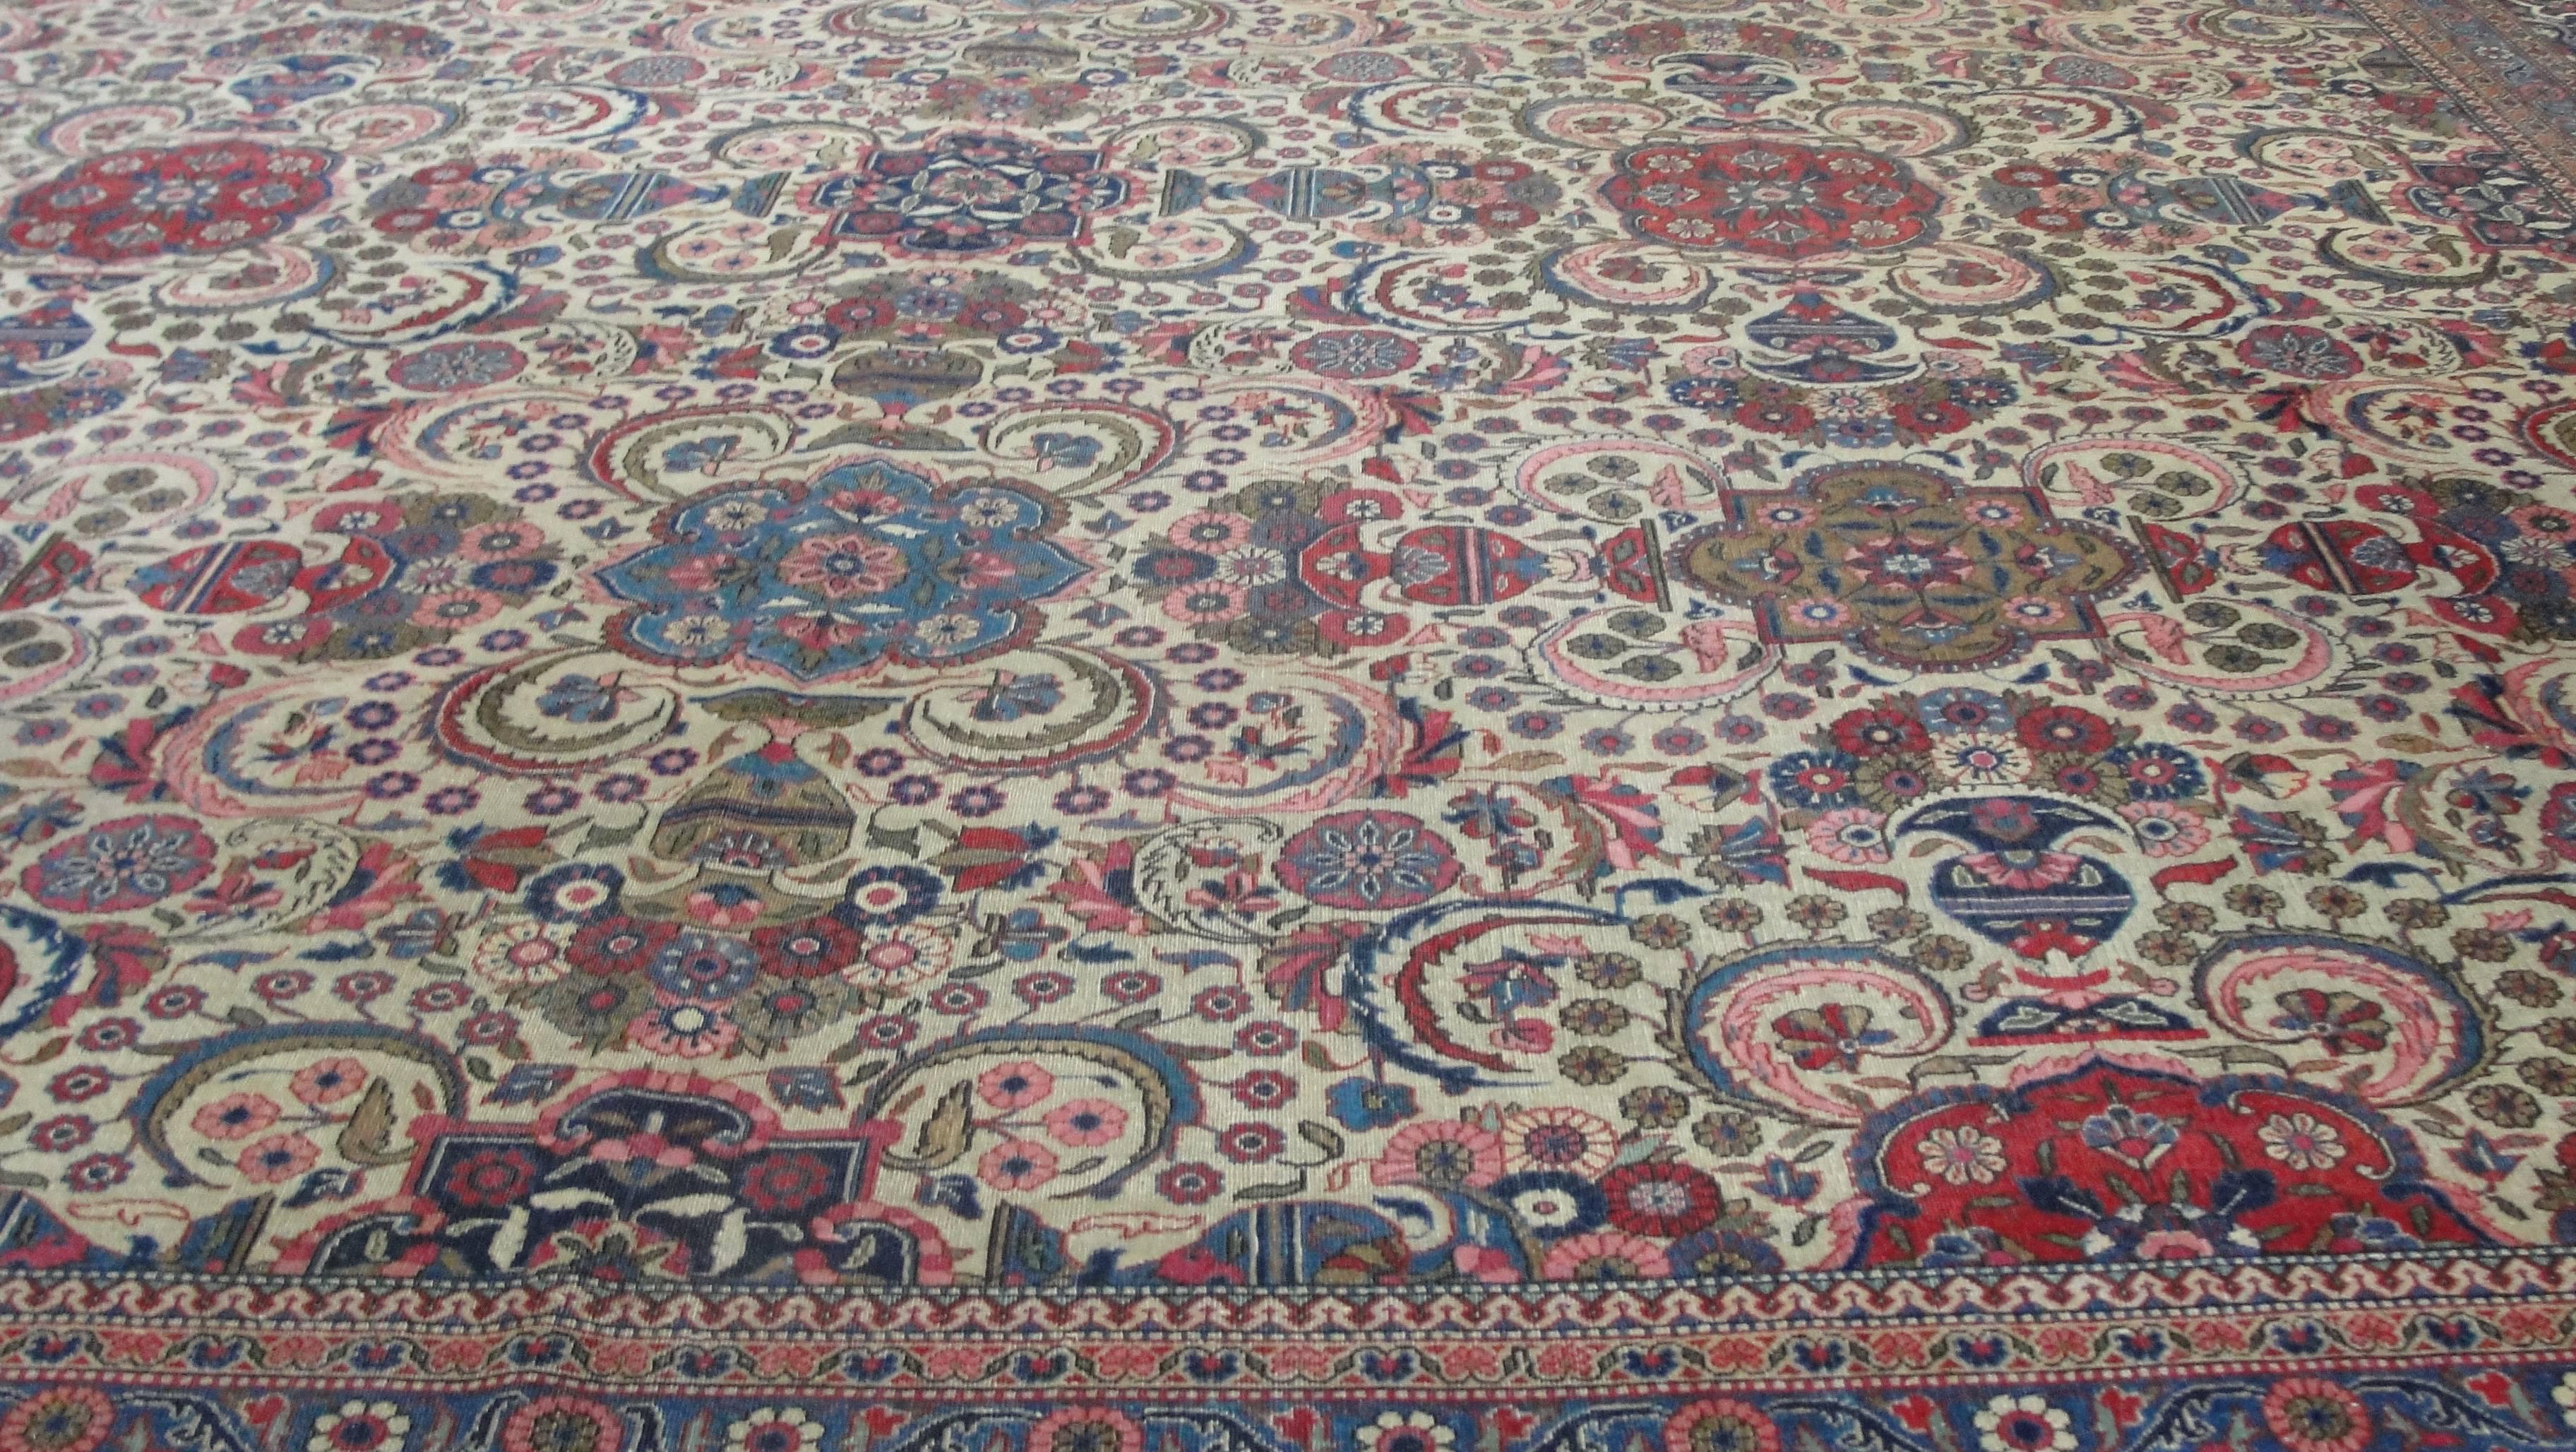 Early 20th Century Antique Persian Dabir Kashan Carpet